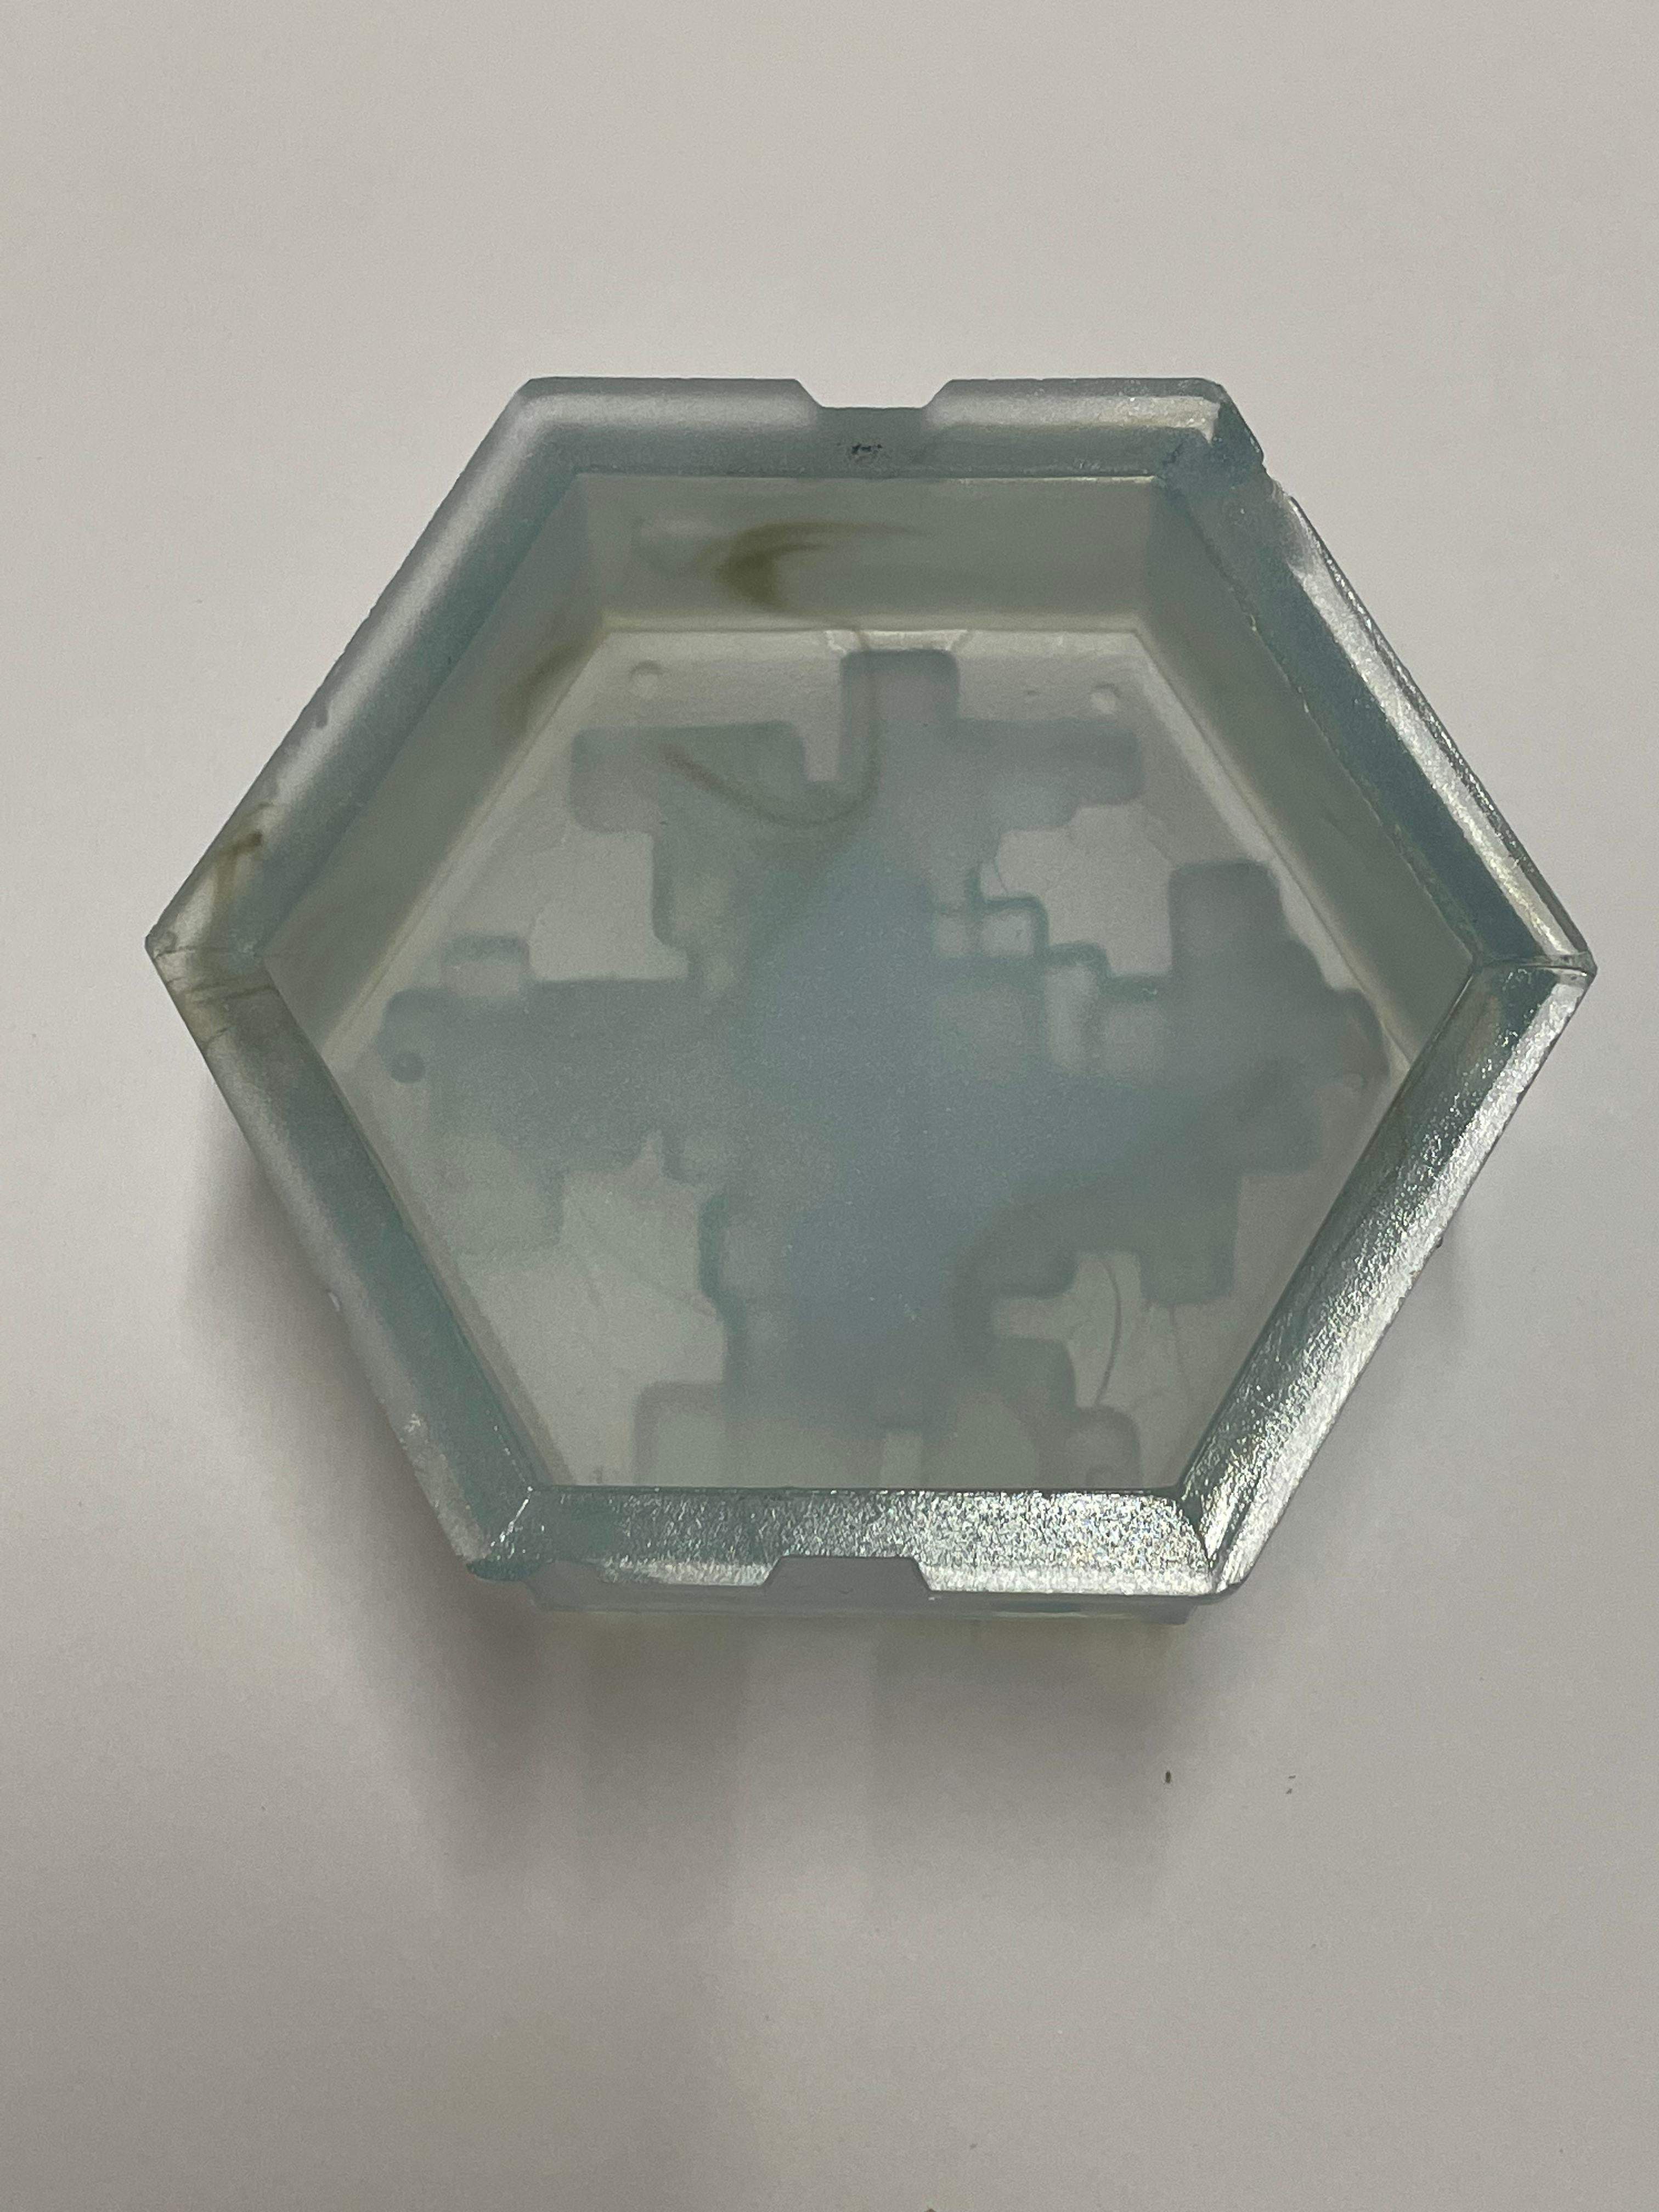 Hexagonal Modular Sconces / Flush Mounts by Poliarte - 3 available For Sale 3